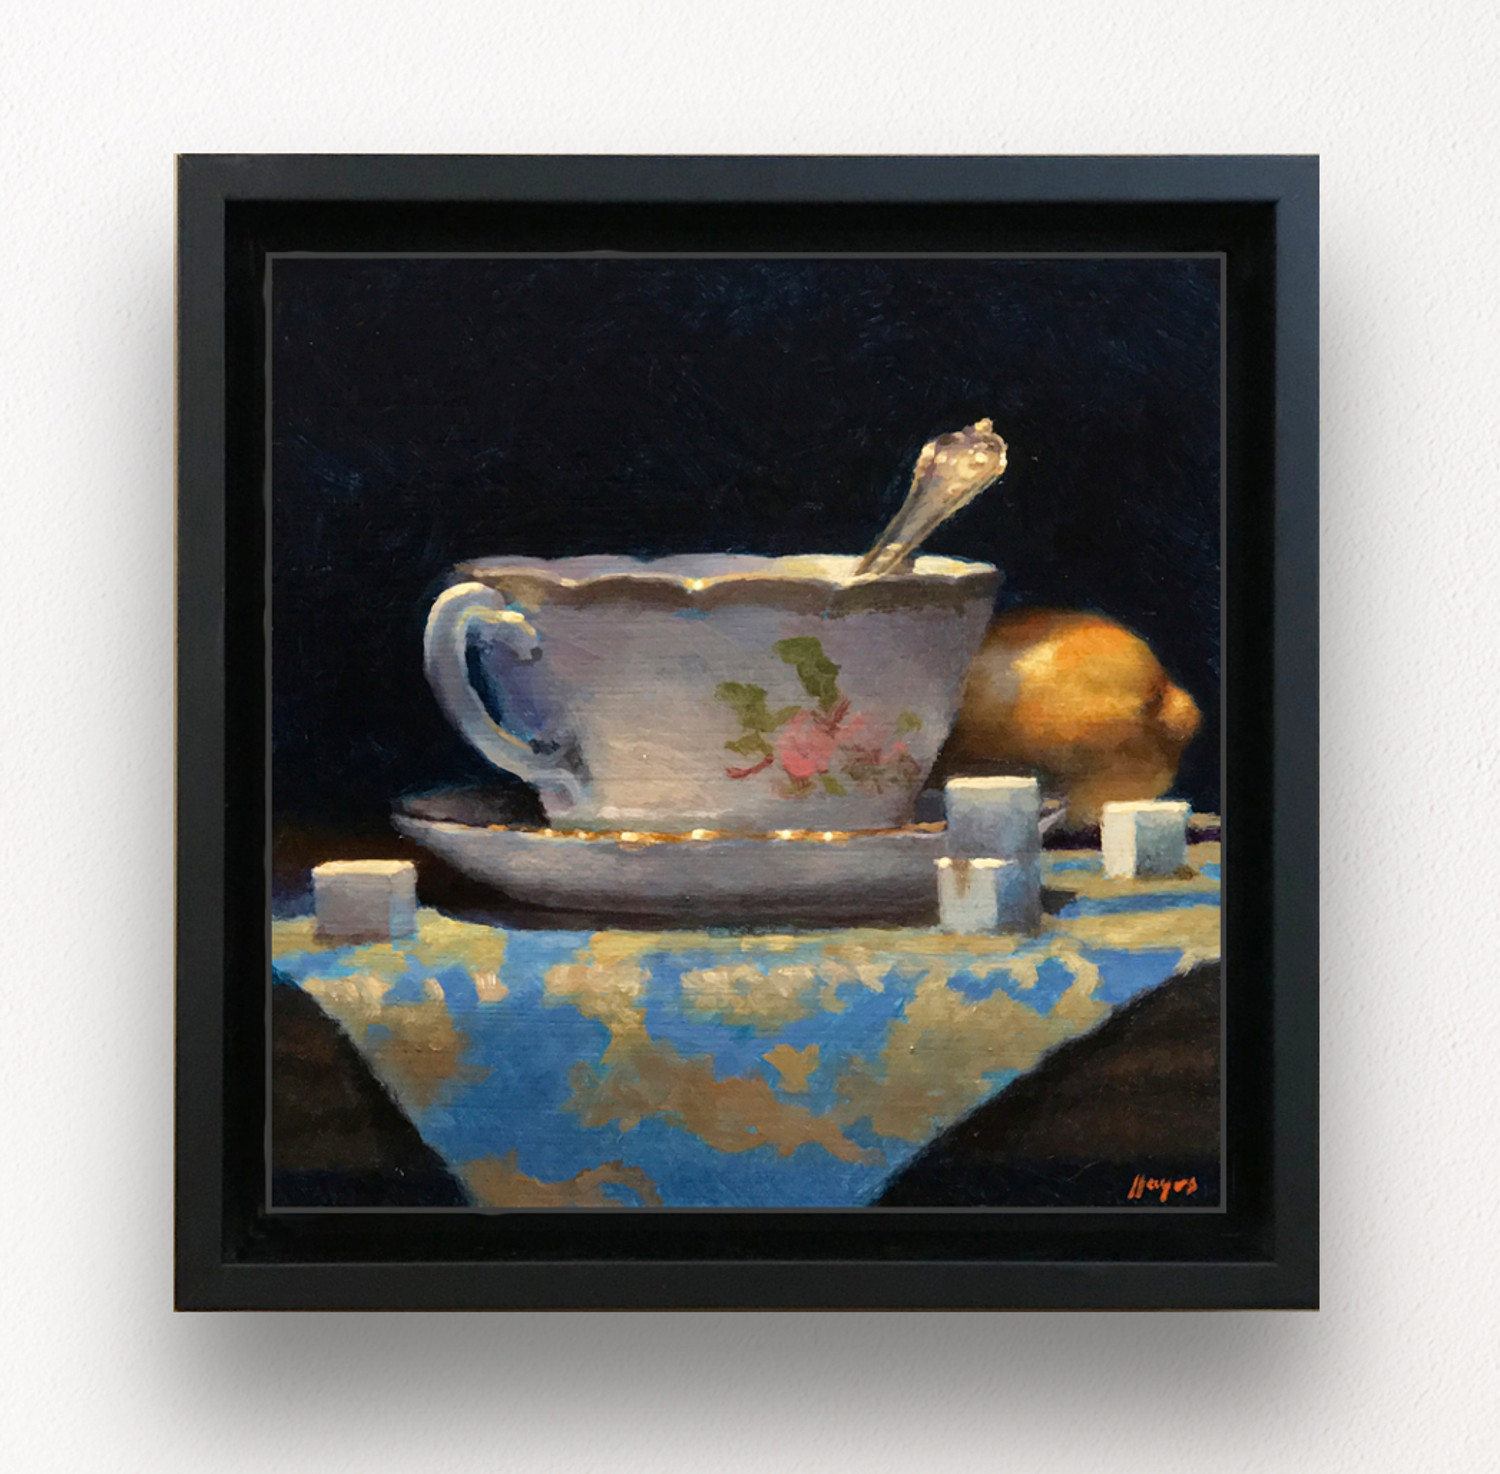 “Teacup, Lemon, Sugar Cubes” Framed Print On Canvas